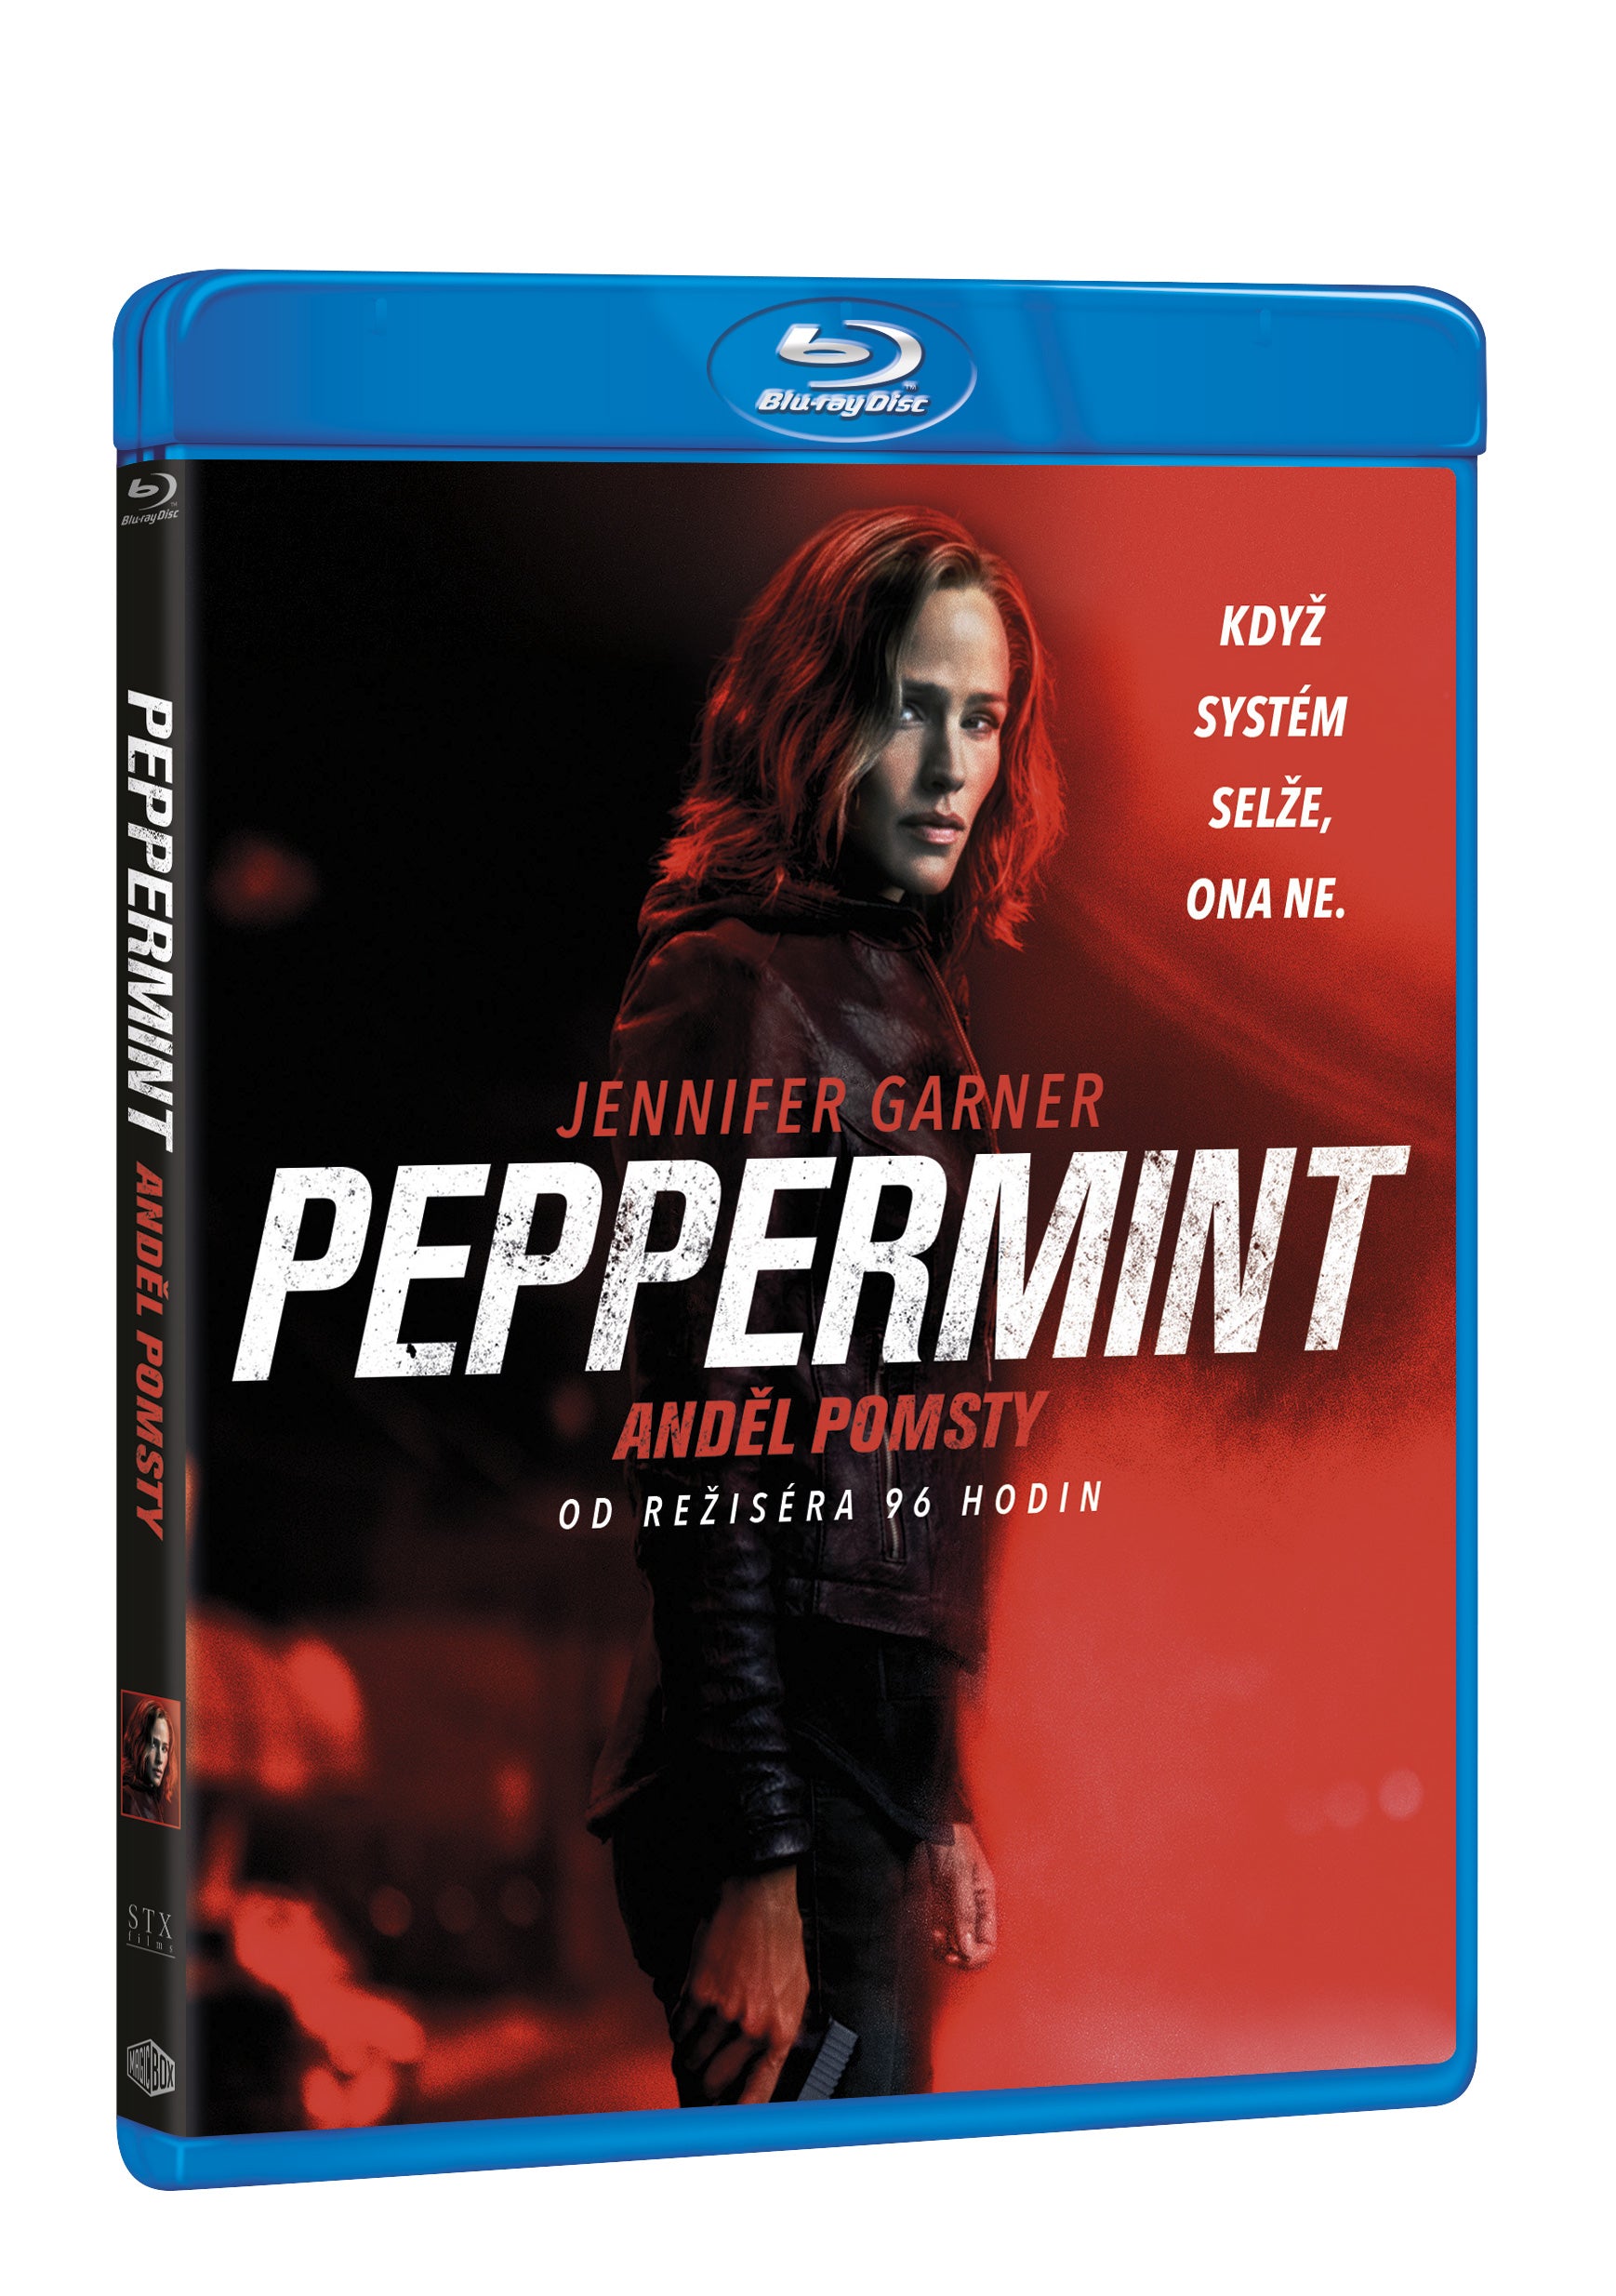 Peppermint: Andel pomsty BD / Peppermint - Czech version